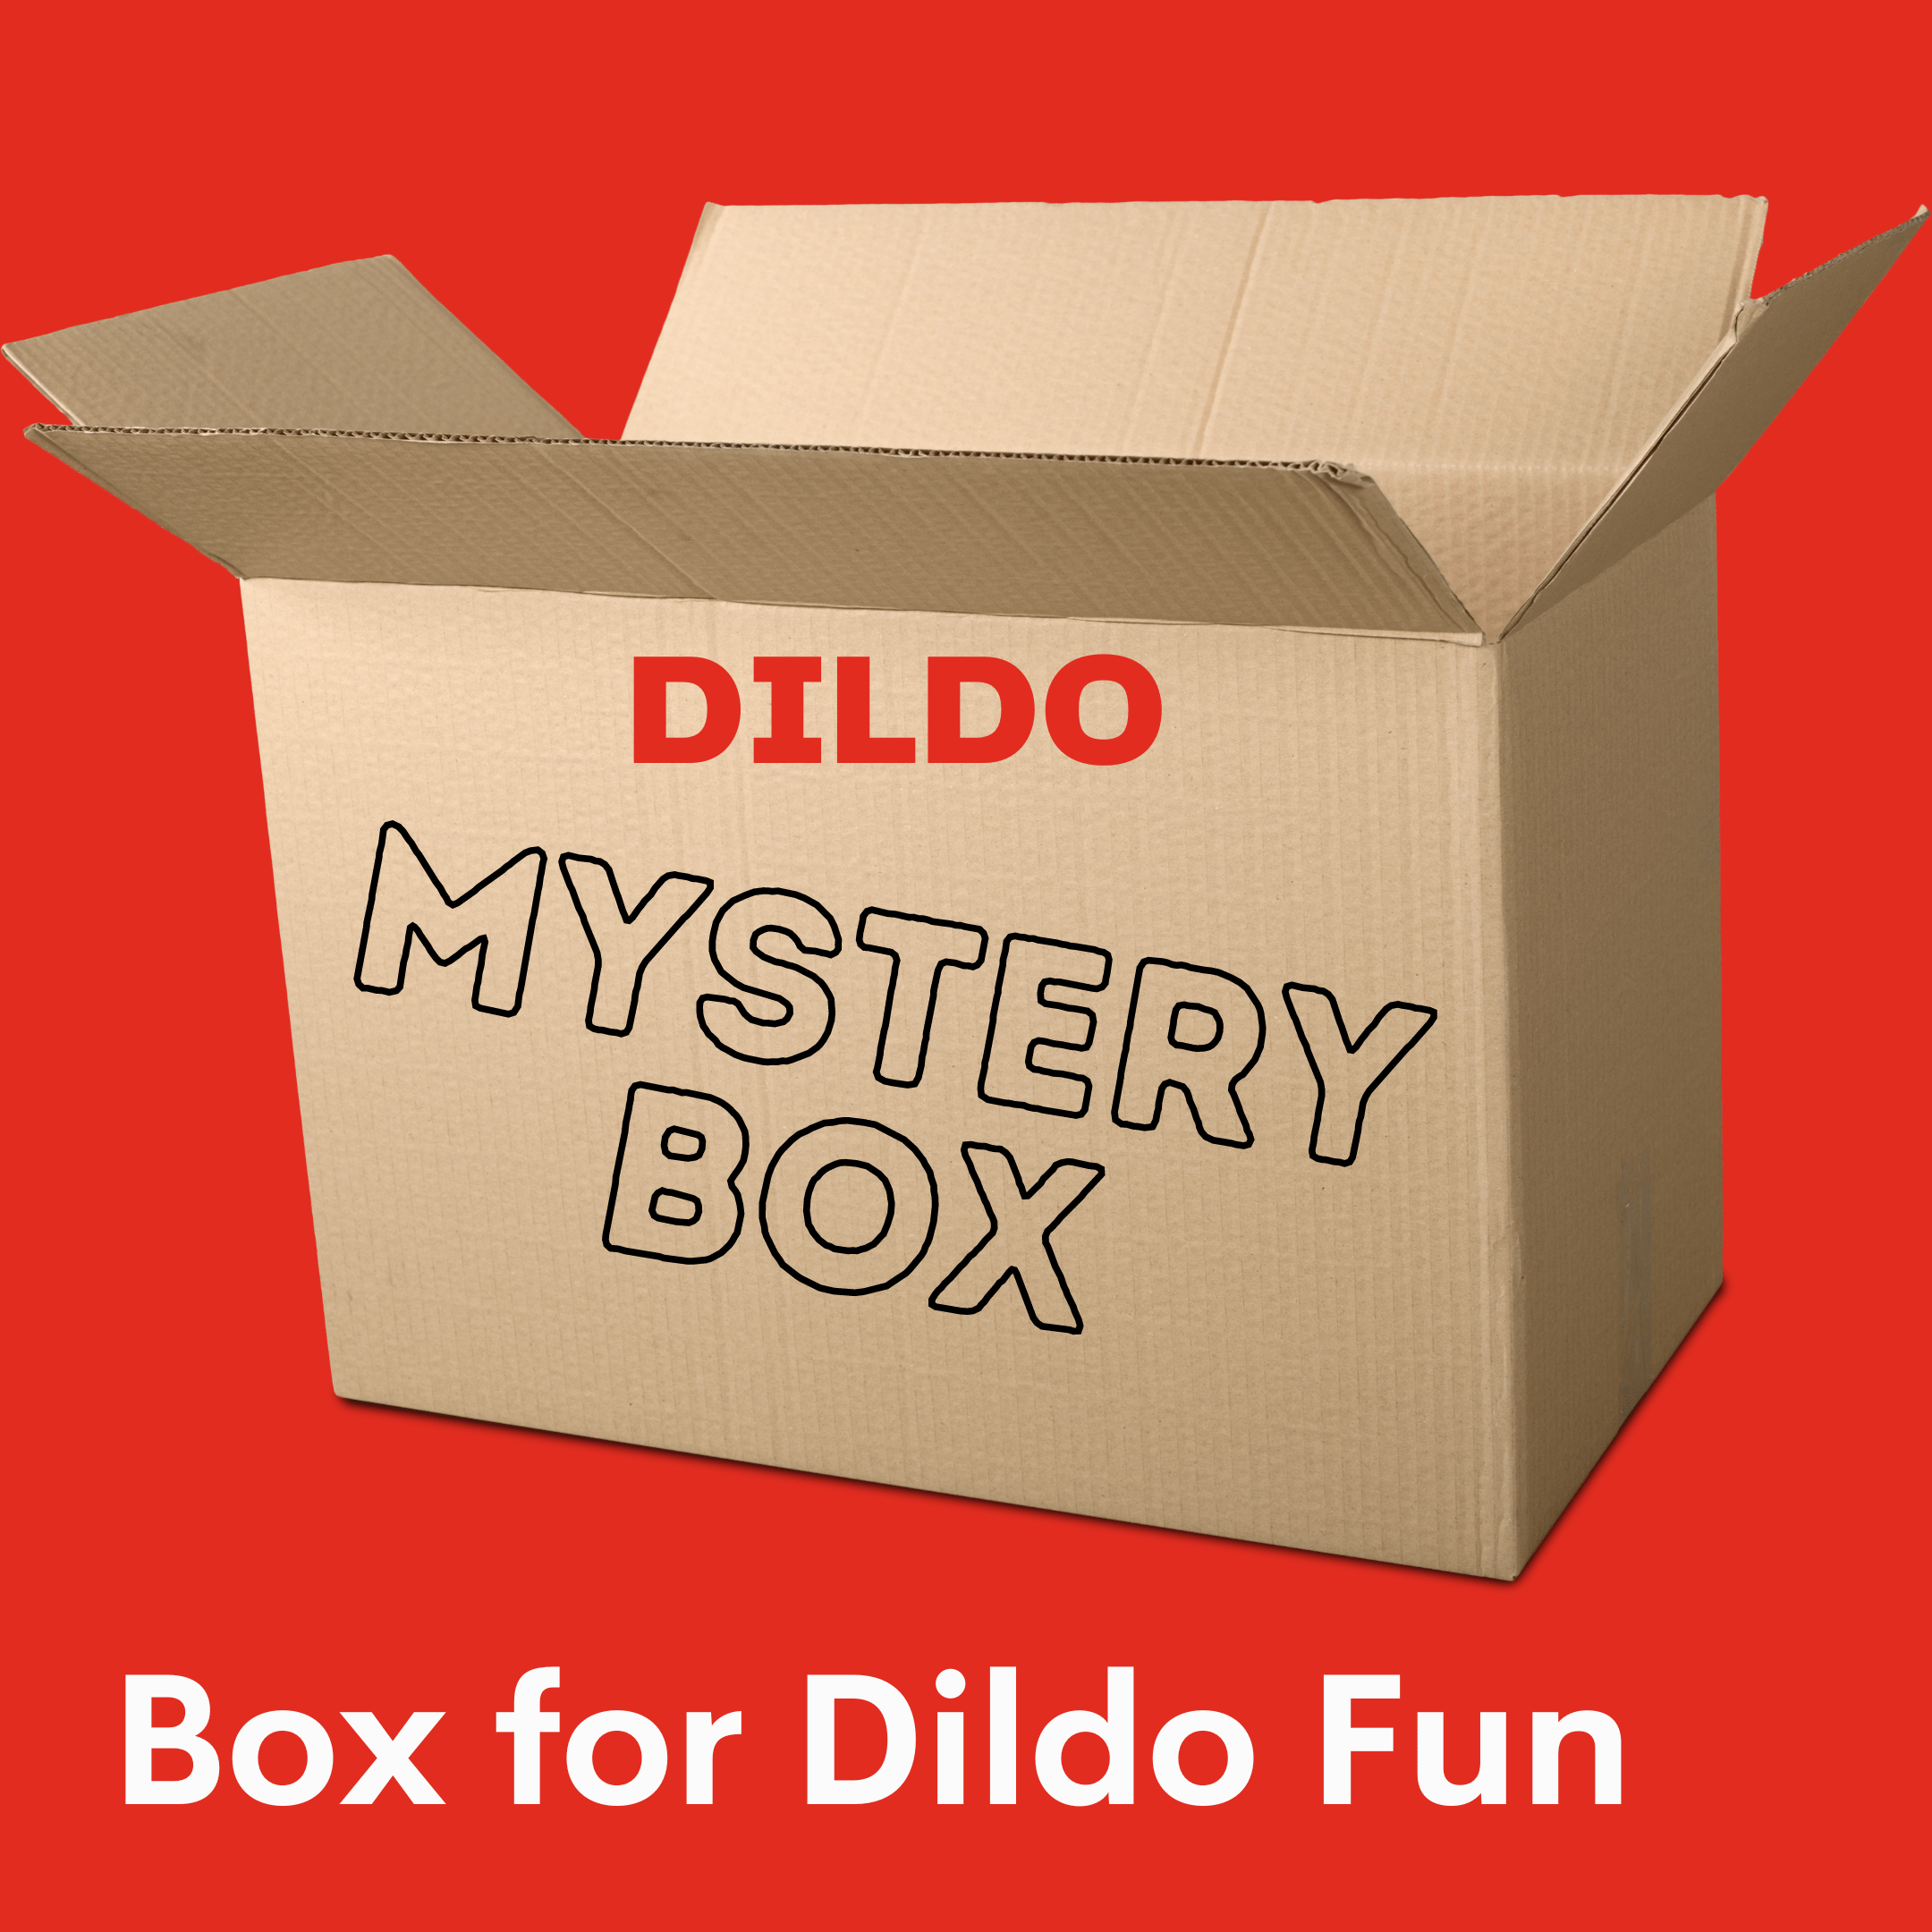 Adult Stuff Warehouse Dildo Mystery Box